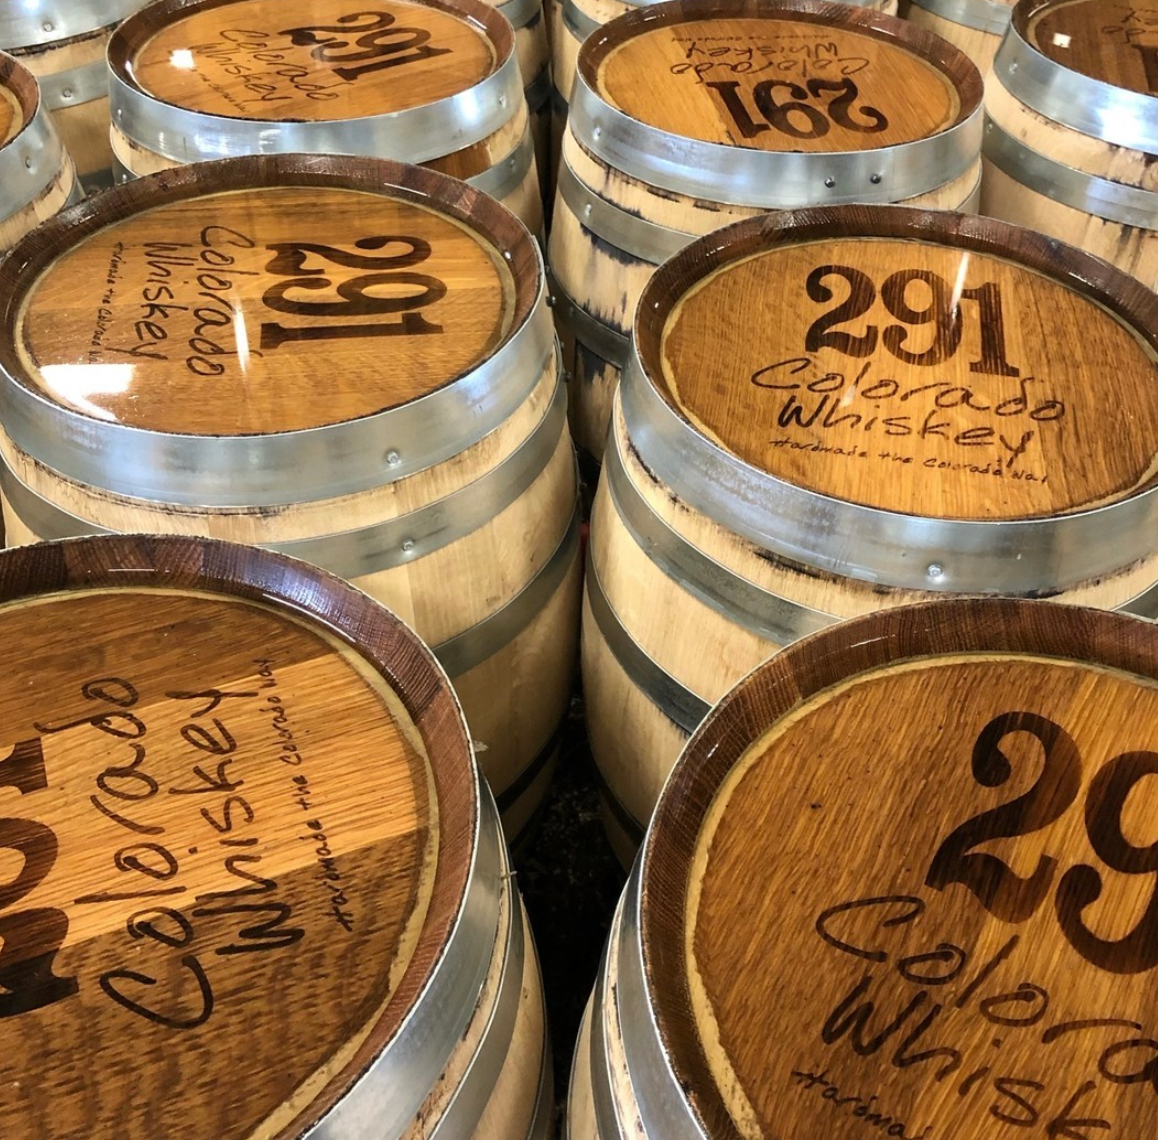 291 Colorado "The HR" Bourbon Whiskey